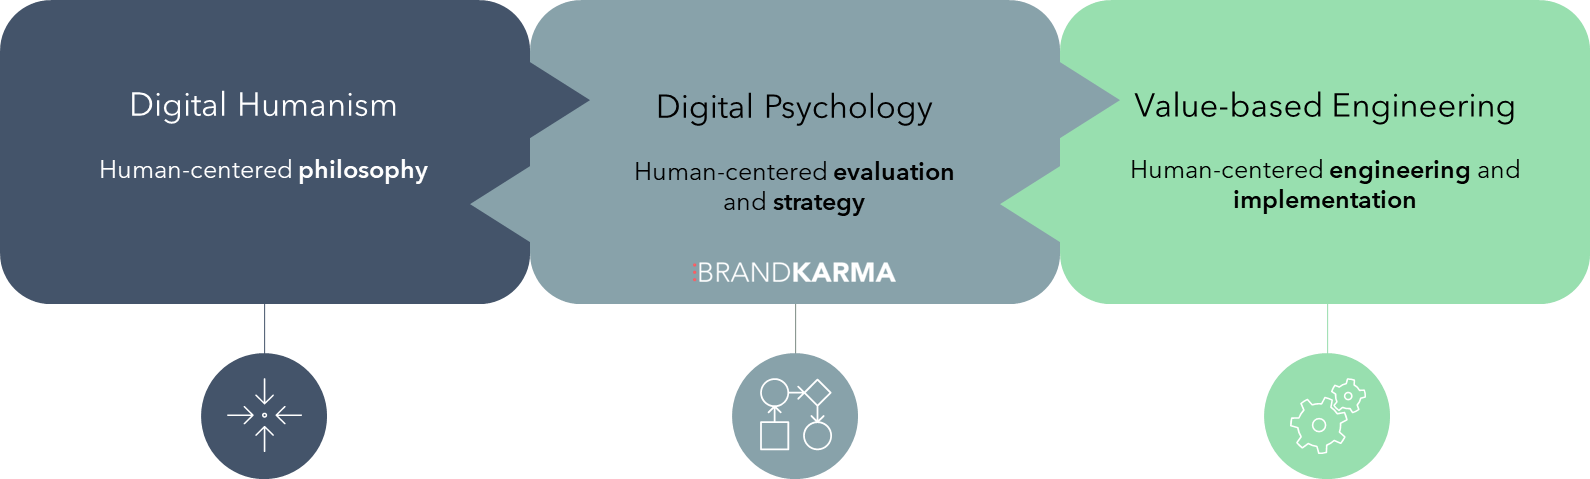 BrandKarma-Digital Psychology-Digital Humanism-Value-Based Engineering